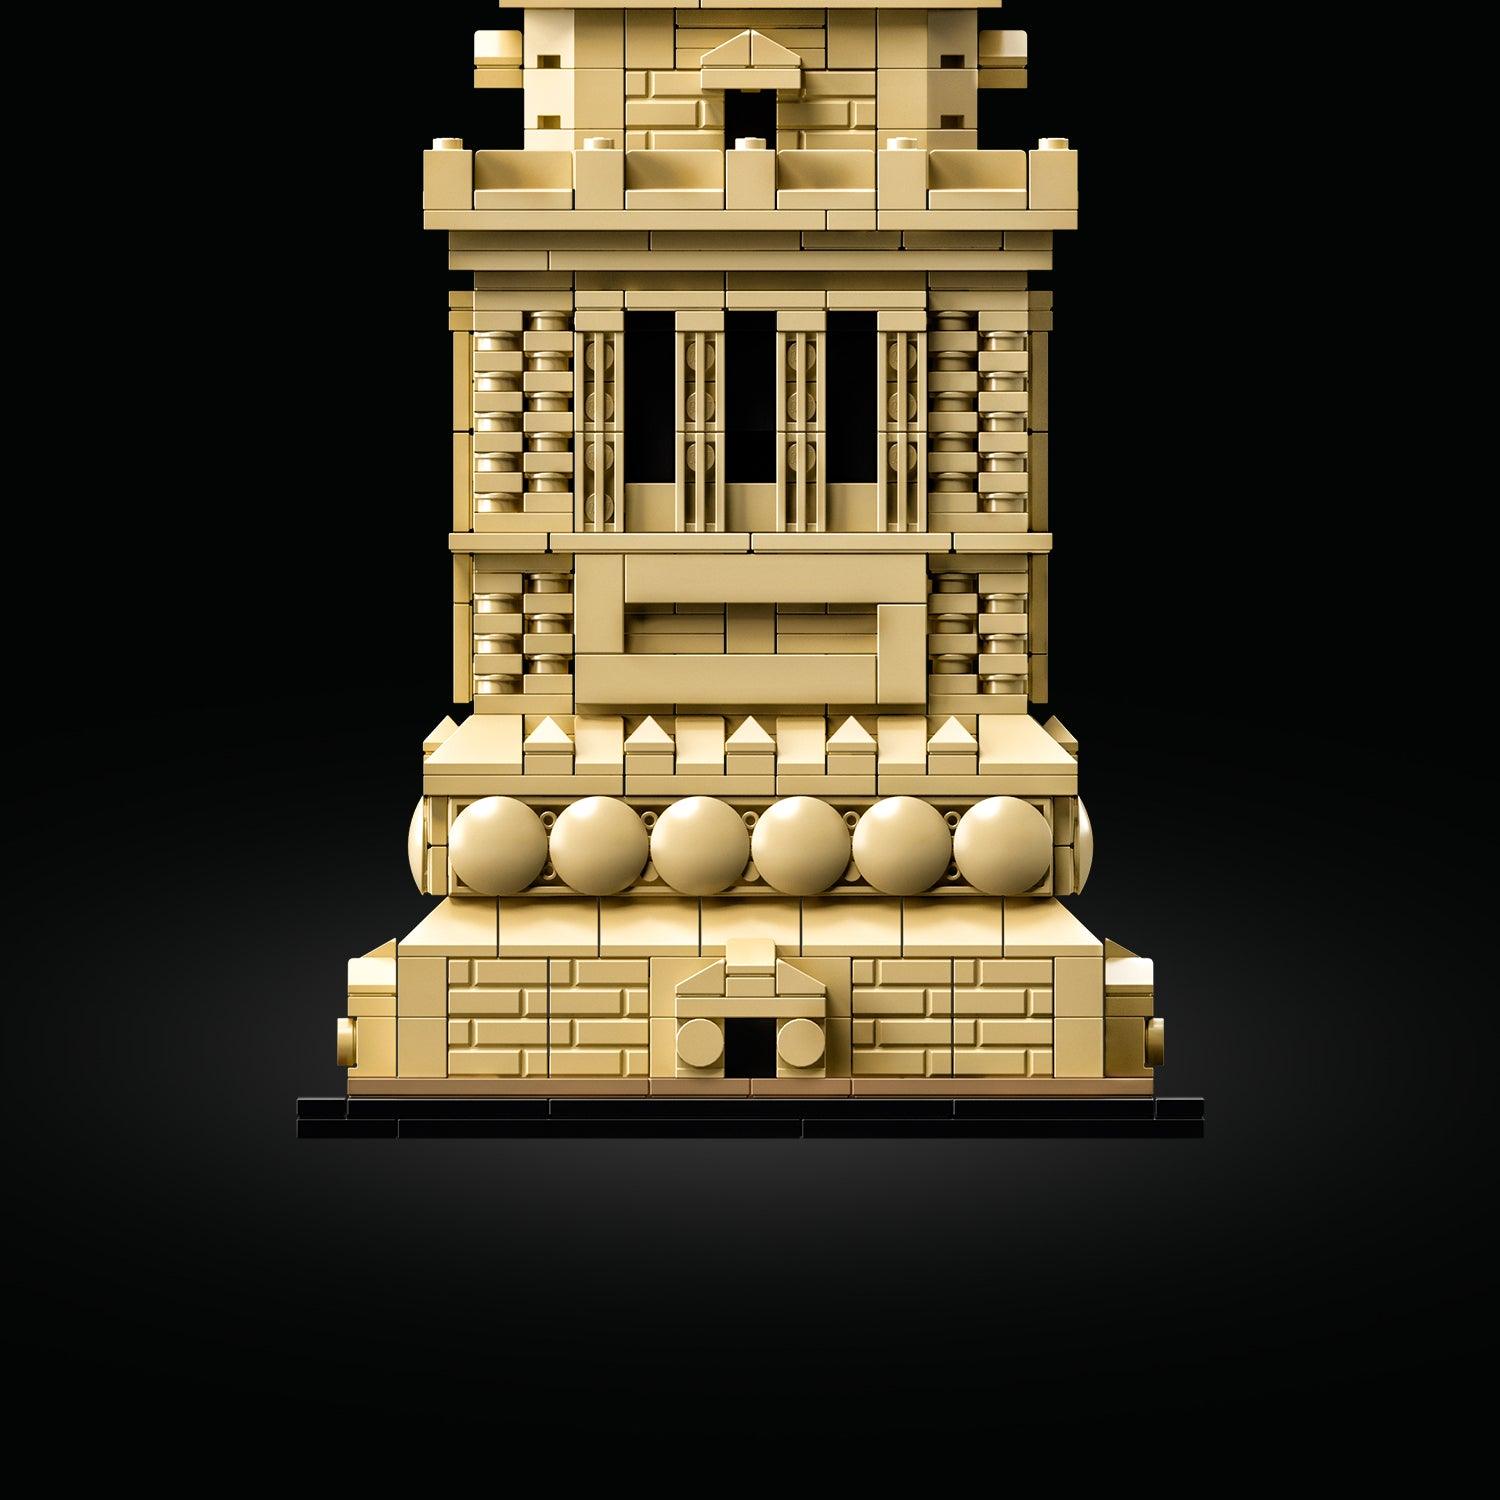 LEGO Vrijheidsbeeld 21042 Architecture | 2TTOYS ✓ Official shop<br>